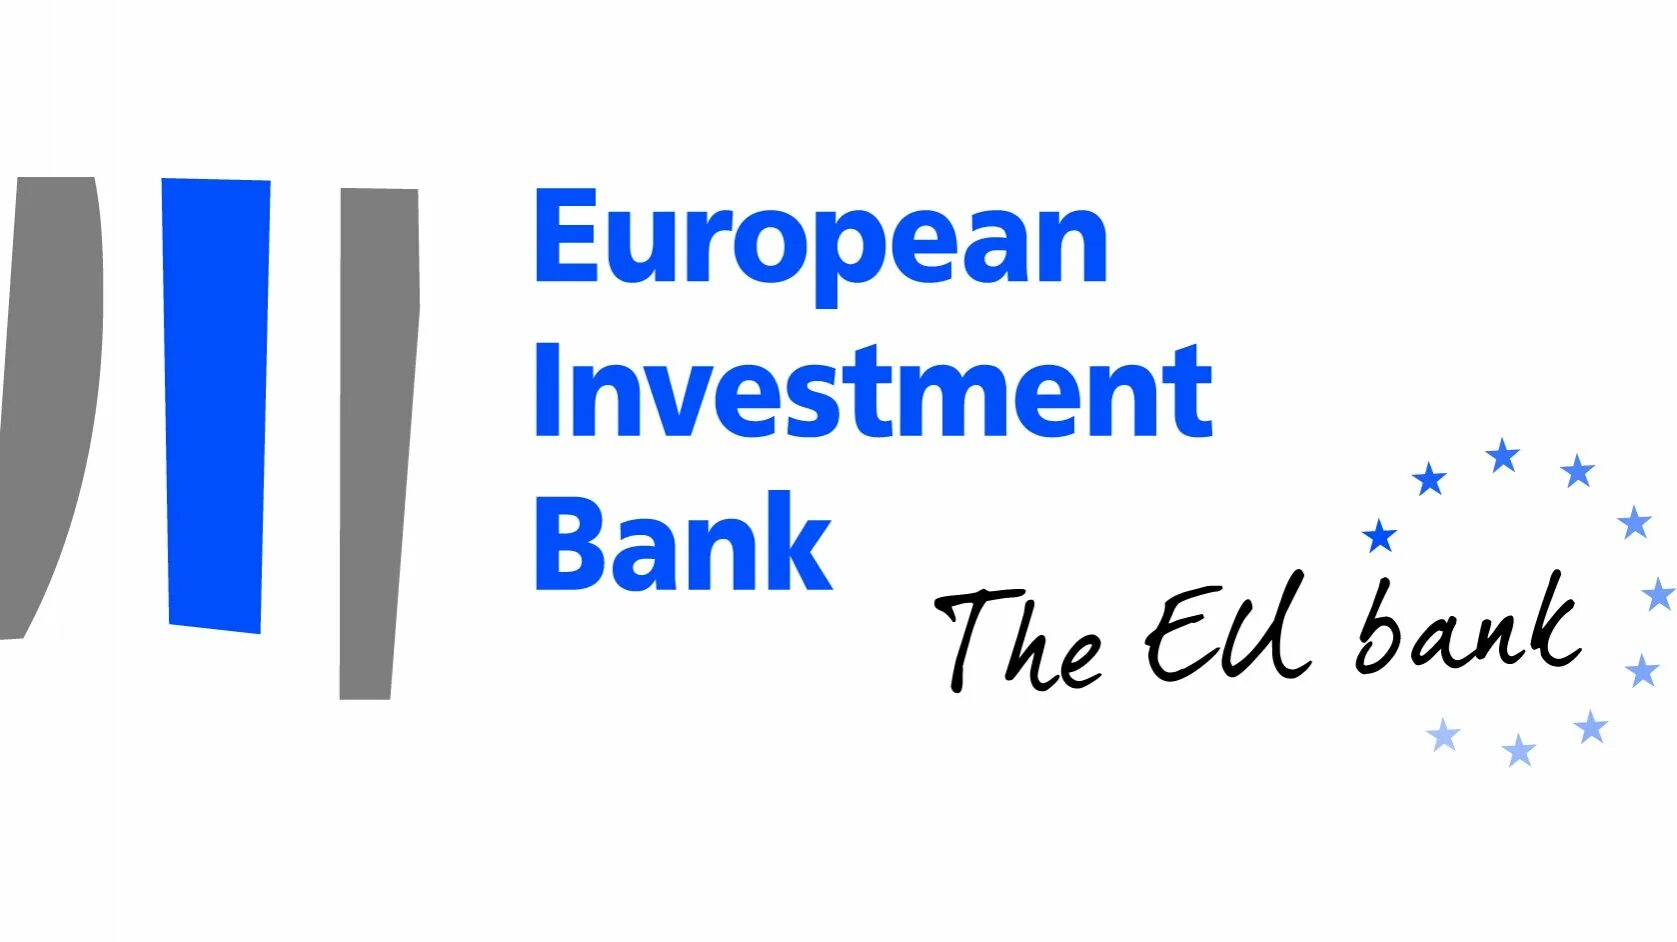 Европейский инвестиционный банк (ЕИБ). European investment Bank лого. Европейский инвестиционный банк логотип. Логотип EIB.